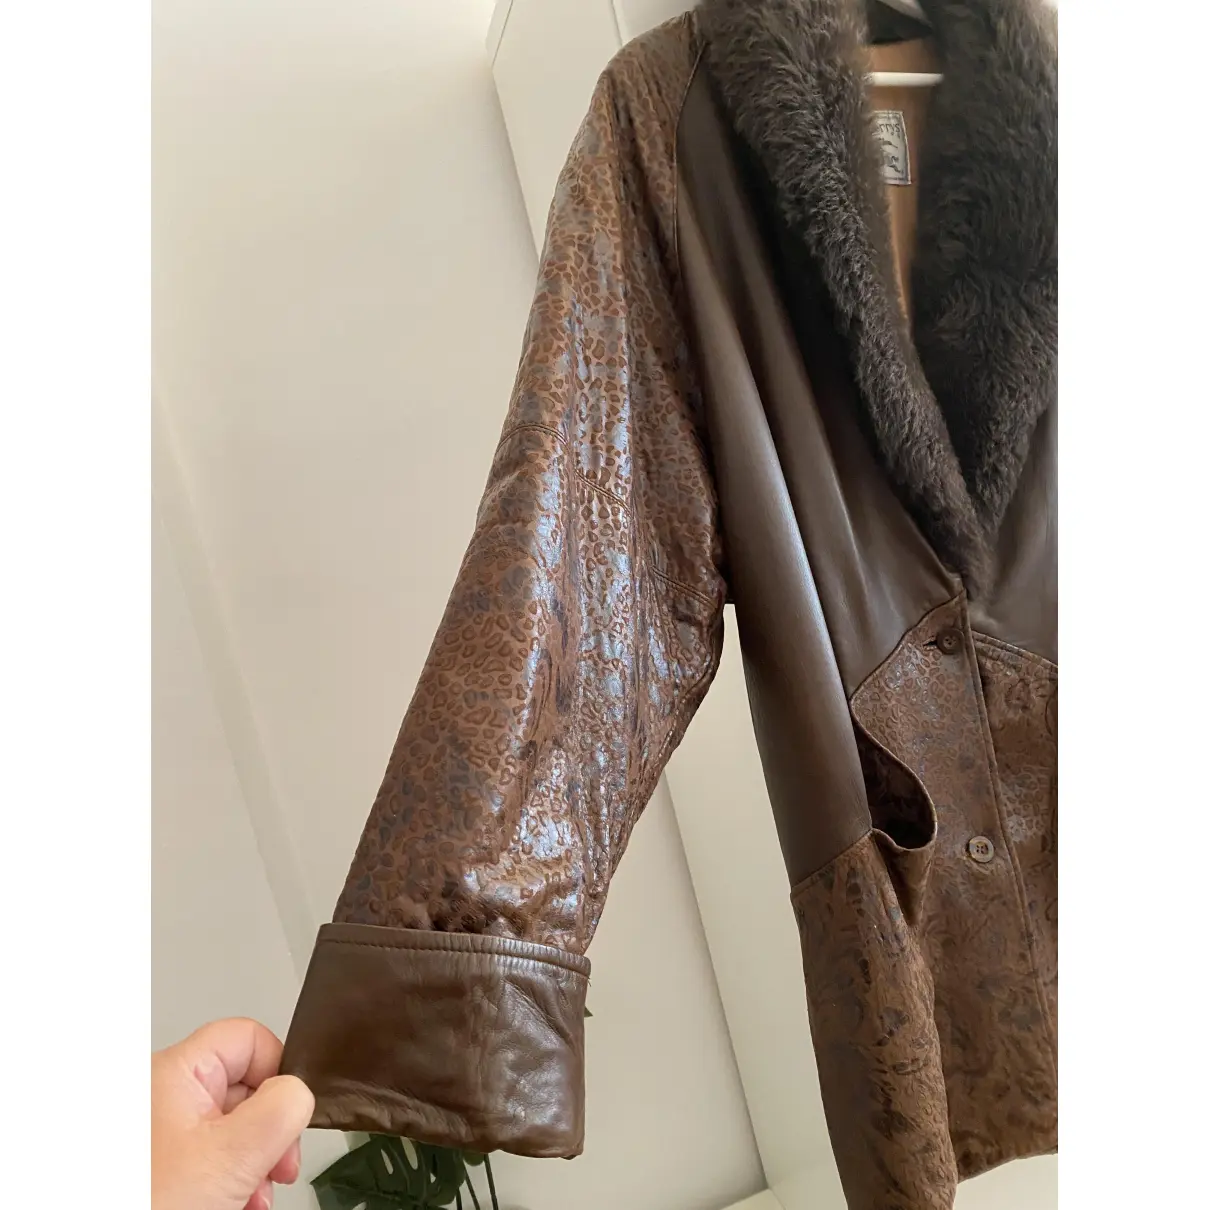 Leather coat Burberry - Vintage